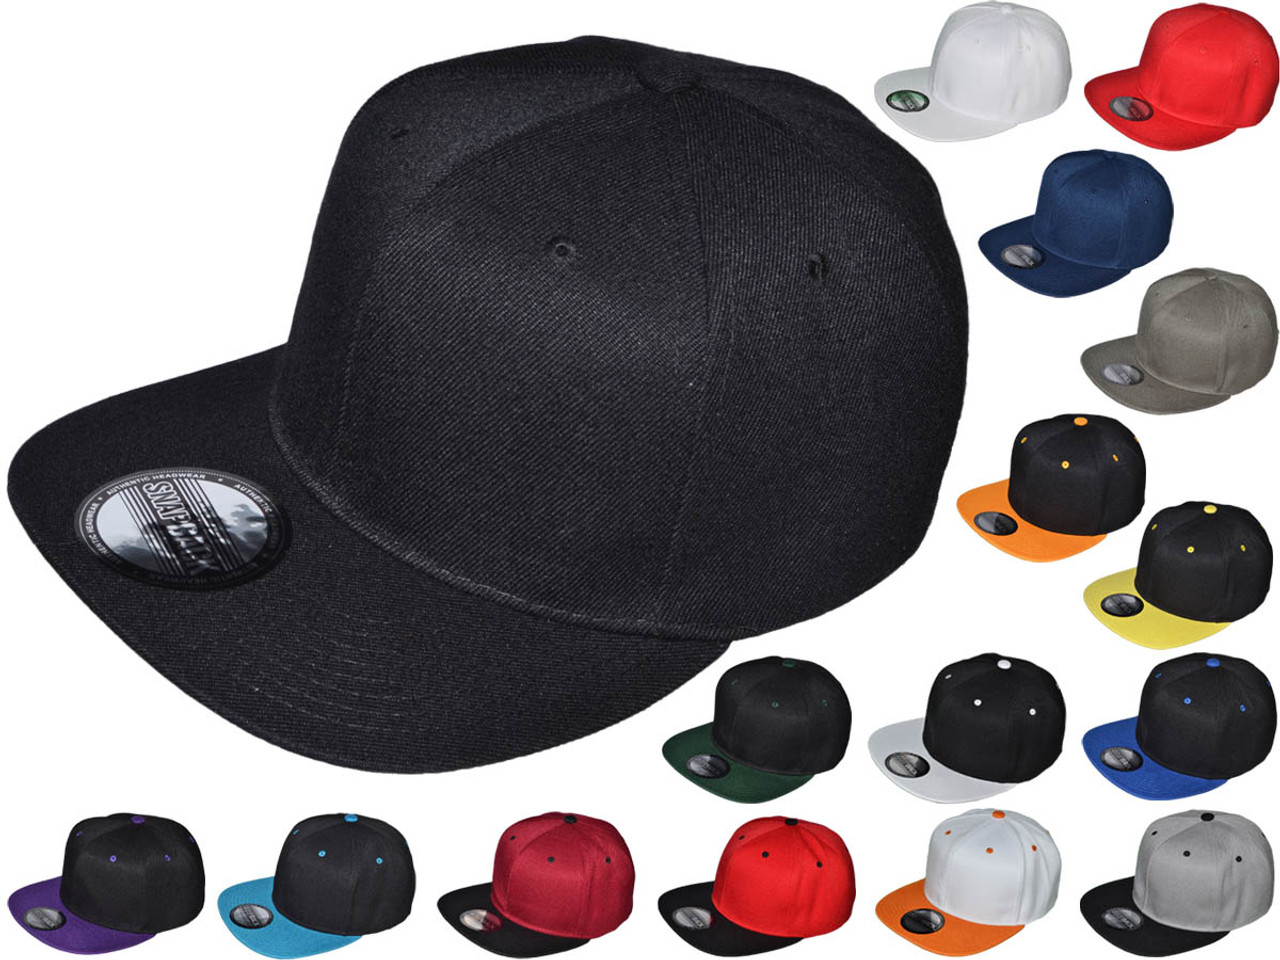 Blank Snapback Hats - Flat Bill Plain Vintage Snapbacks with Same Color Underbill - 5340